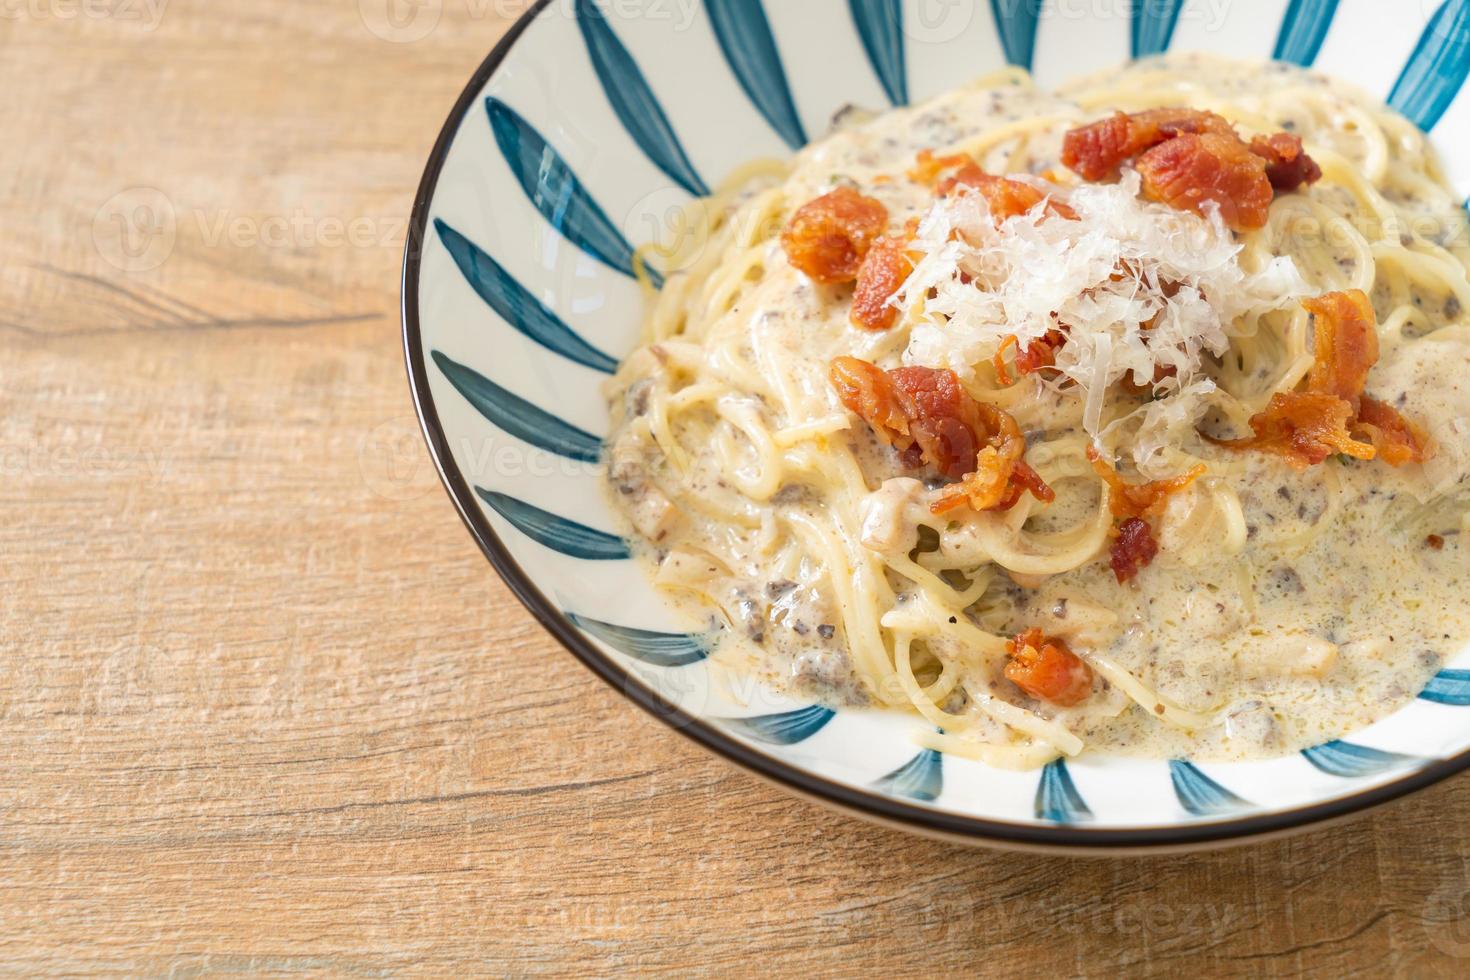 spaghetti met truffelroomsaus en champignons foto